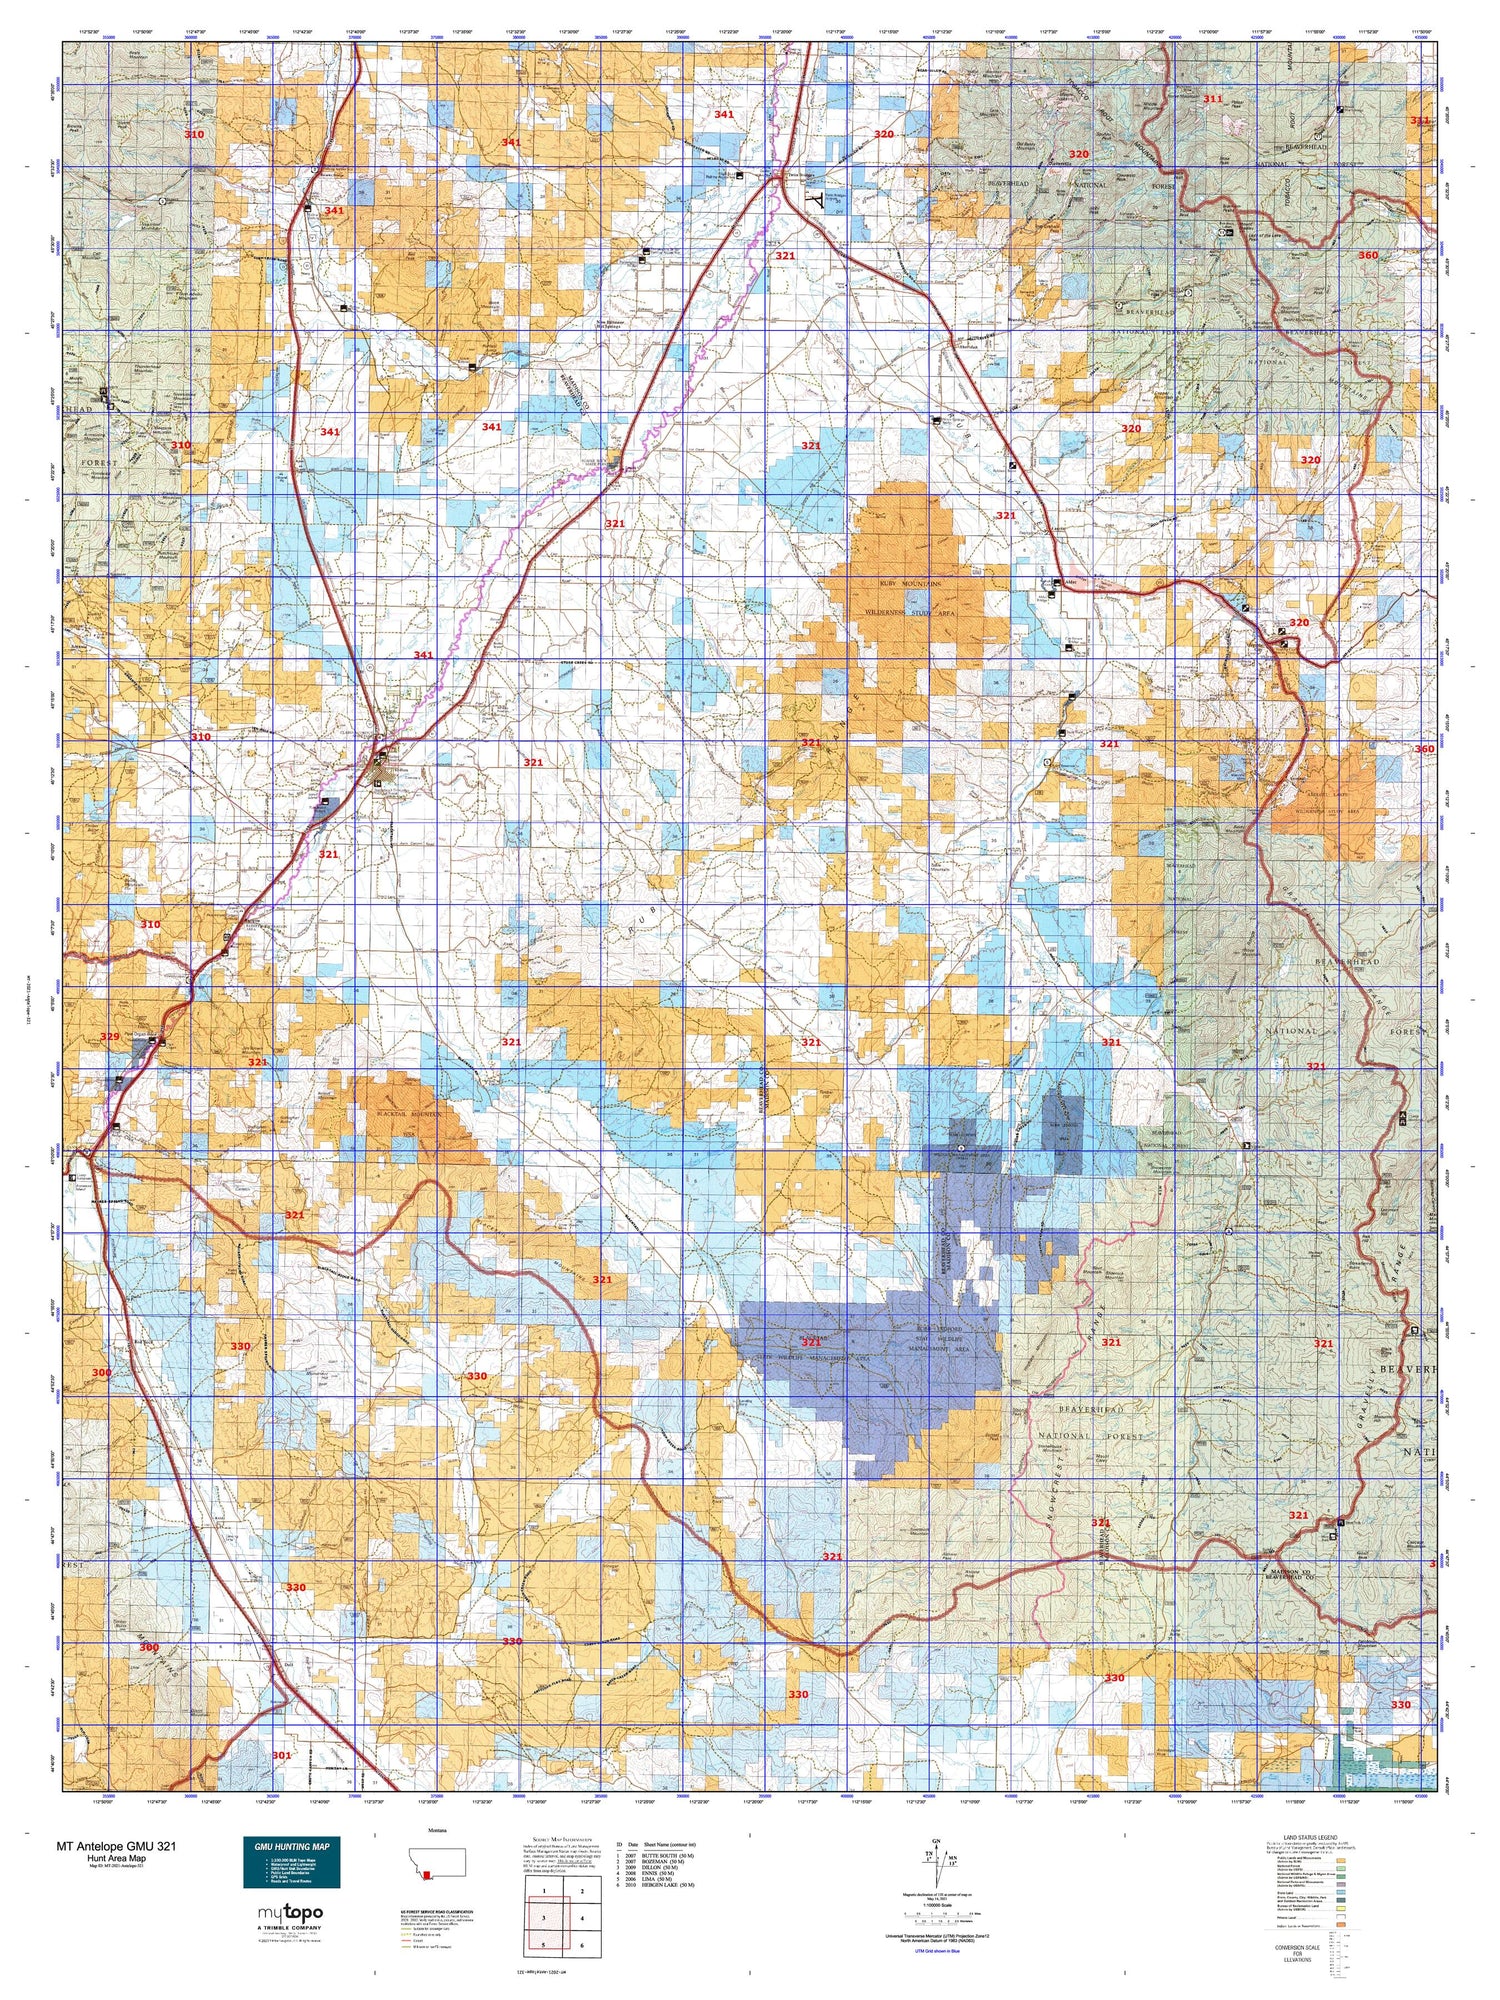 Montana Antelope GMU 321 Map Image